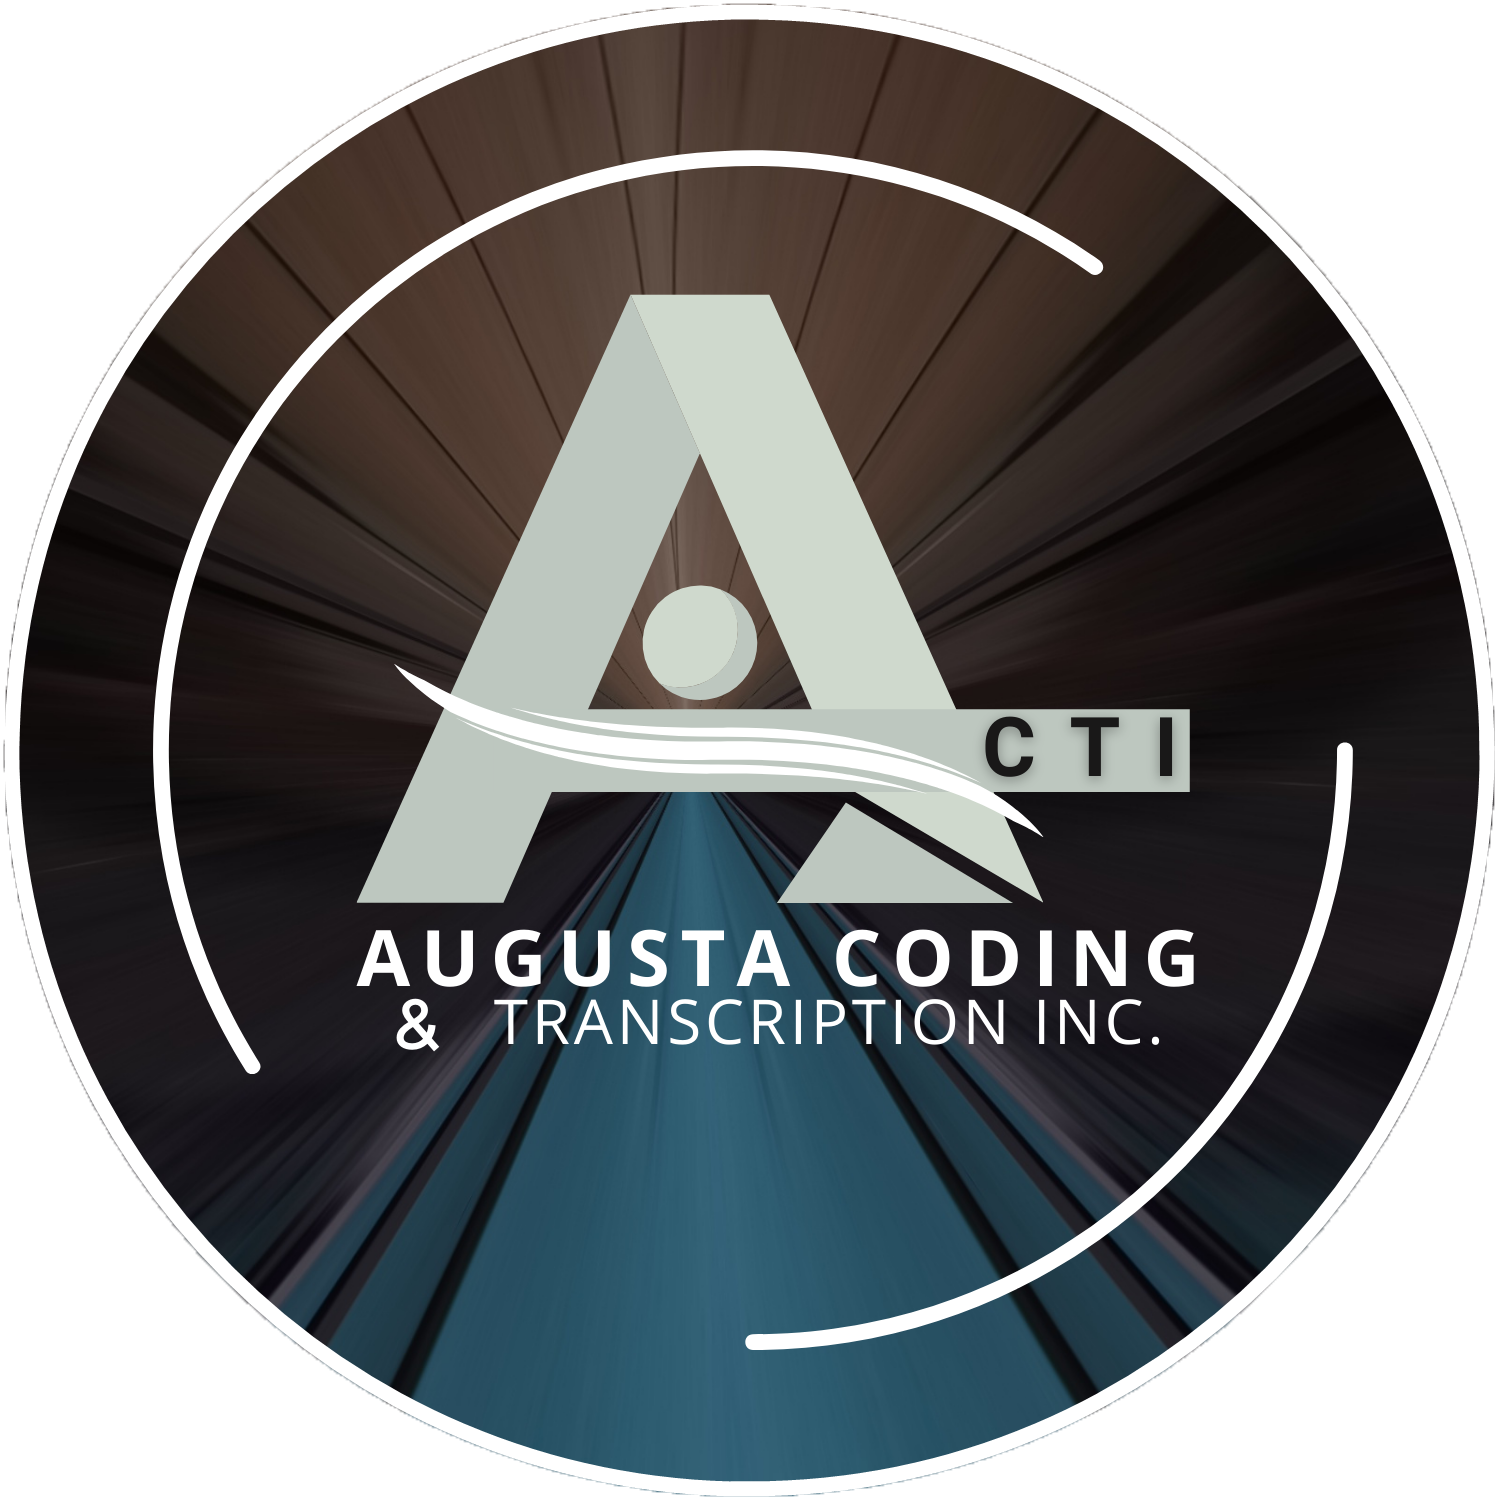 Augusta Coding & Transcription